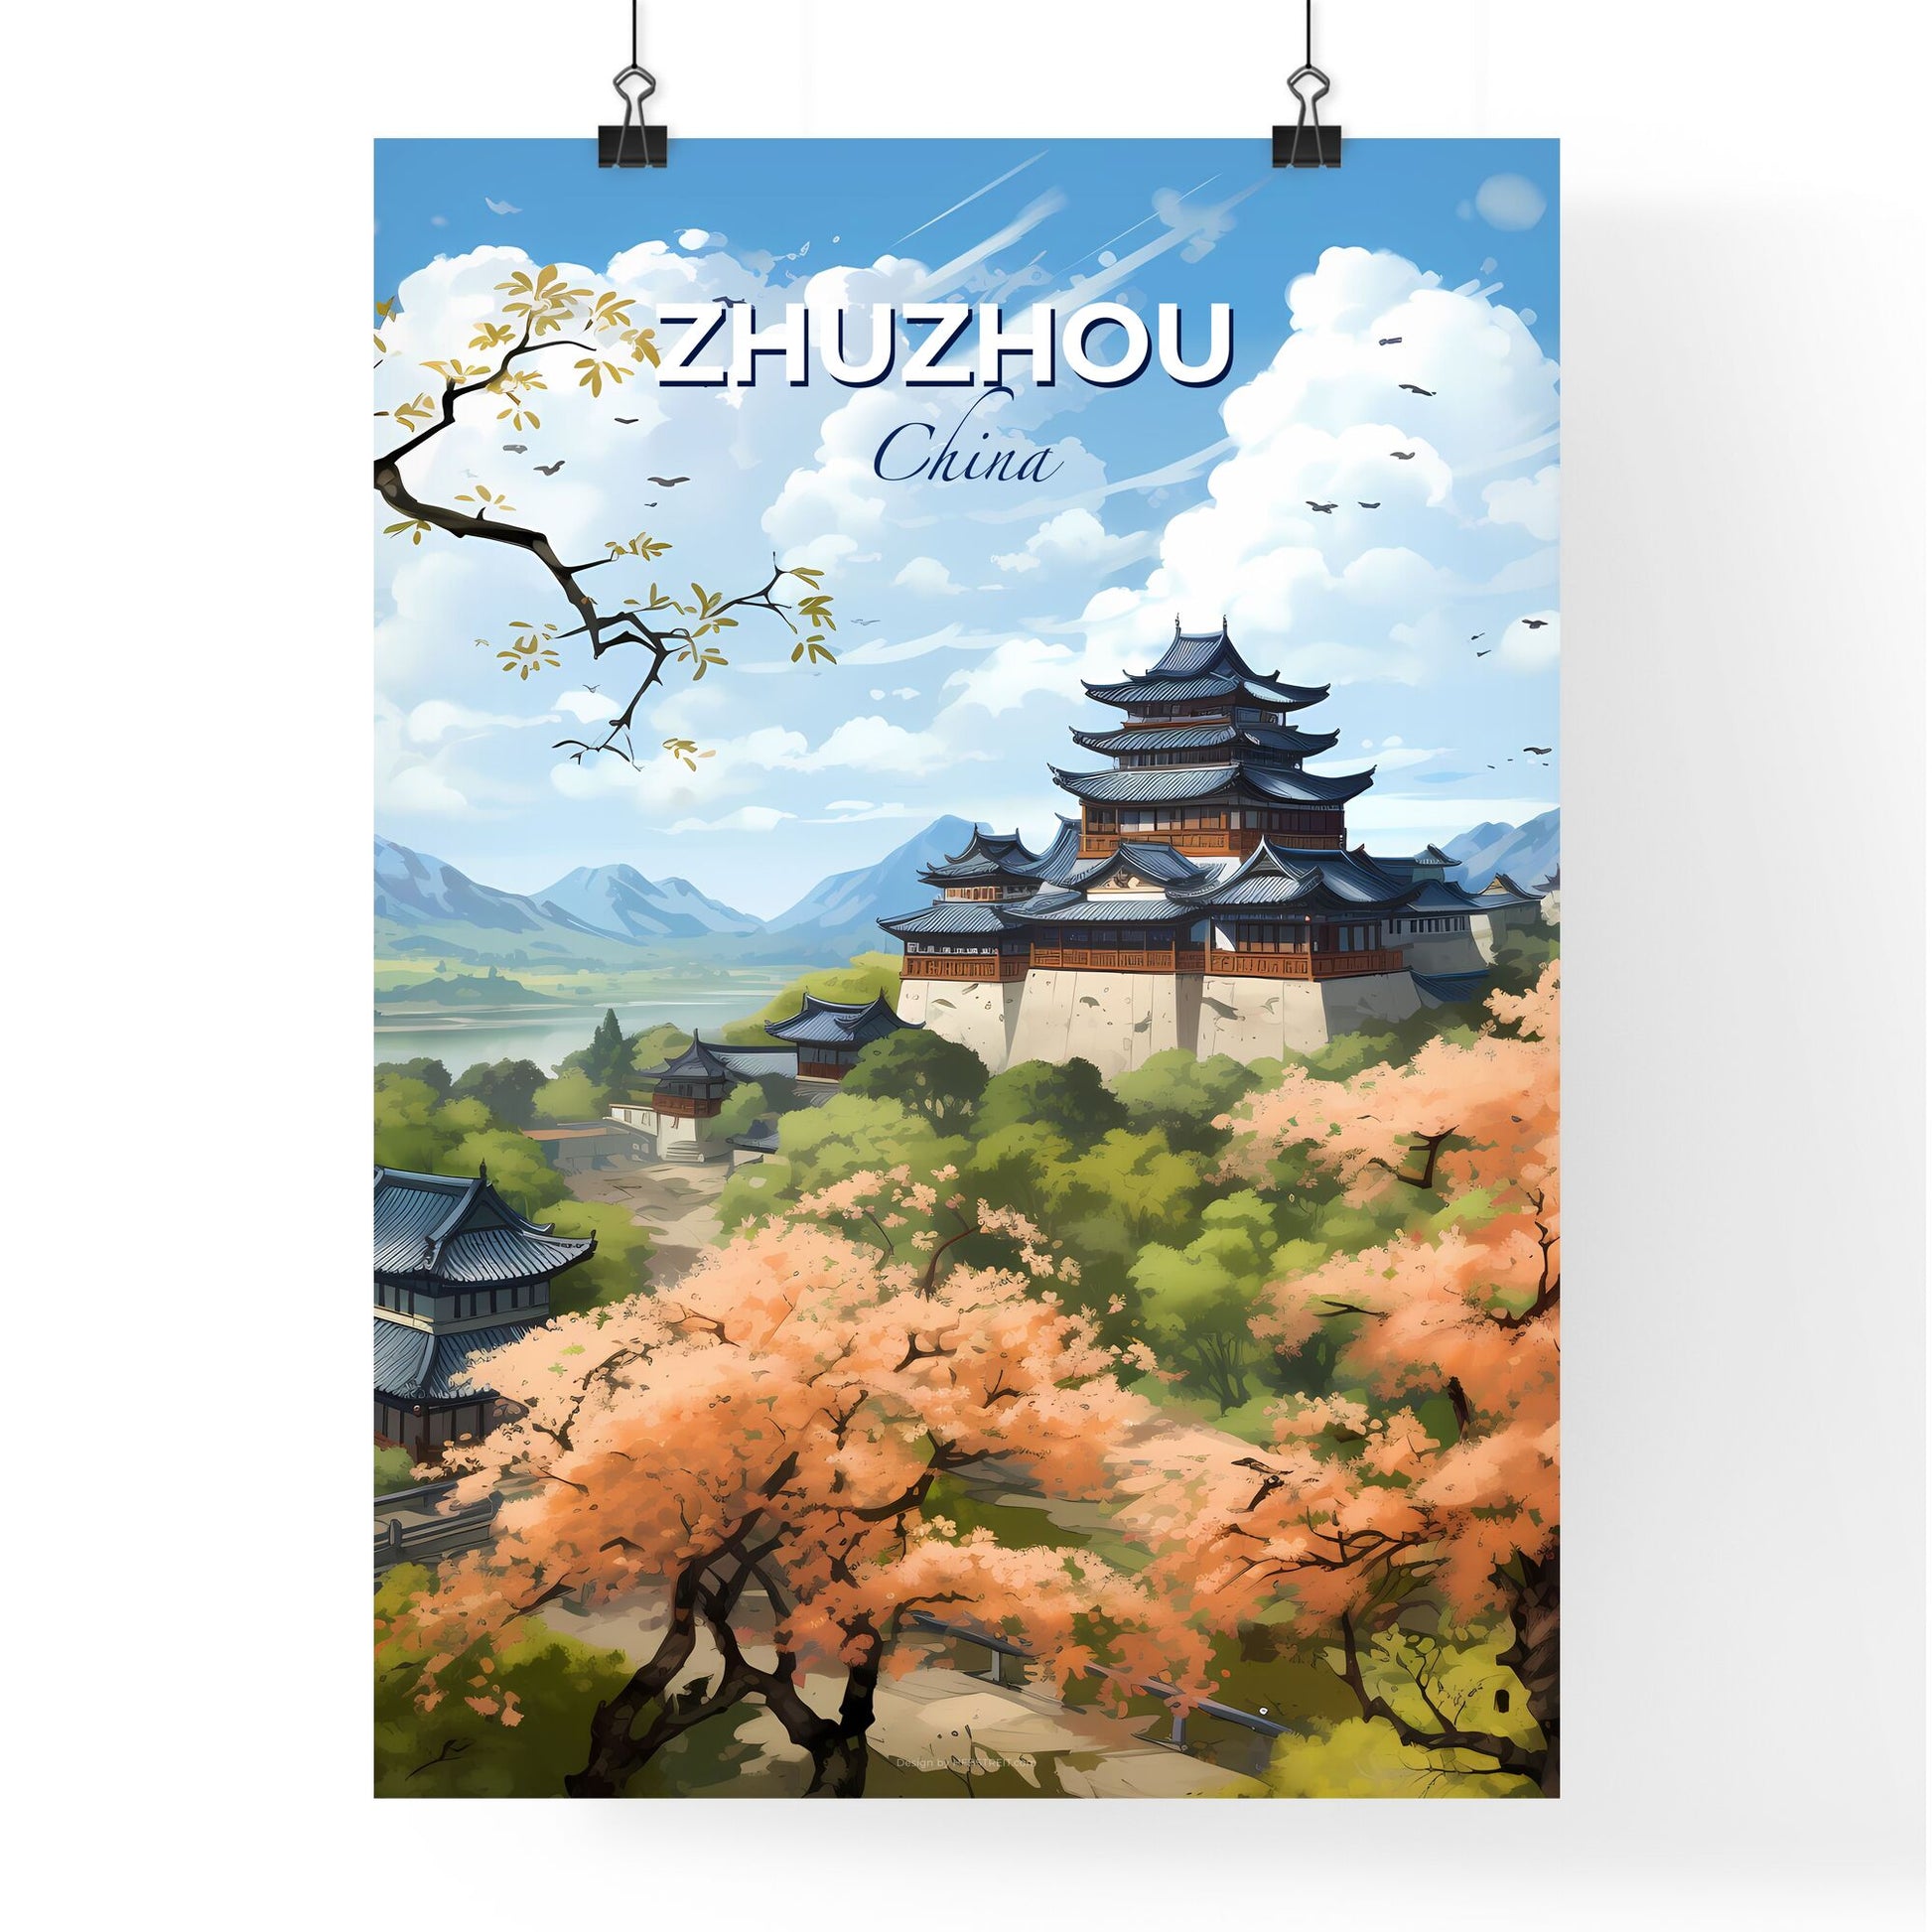 Zhuzhou China Skyline Painting - Vibrant Art with Pagoda and Greenery Default Title